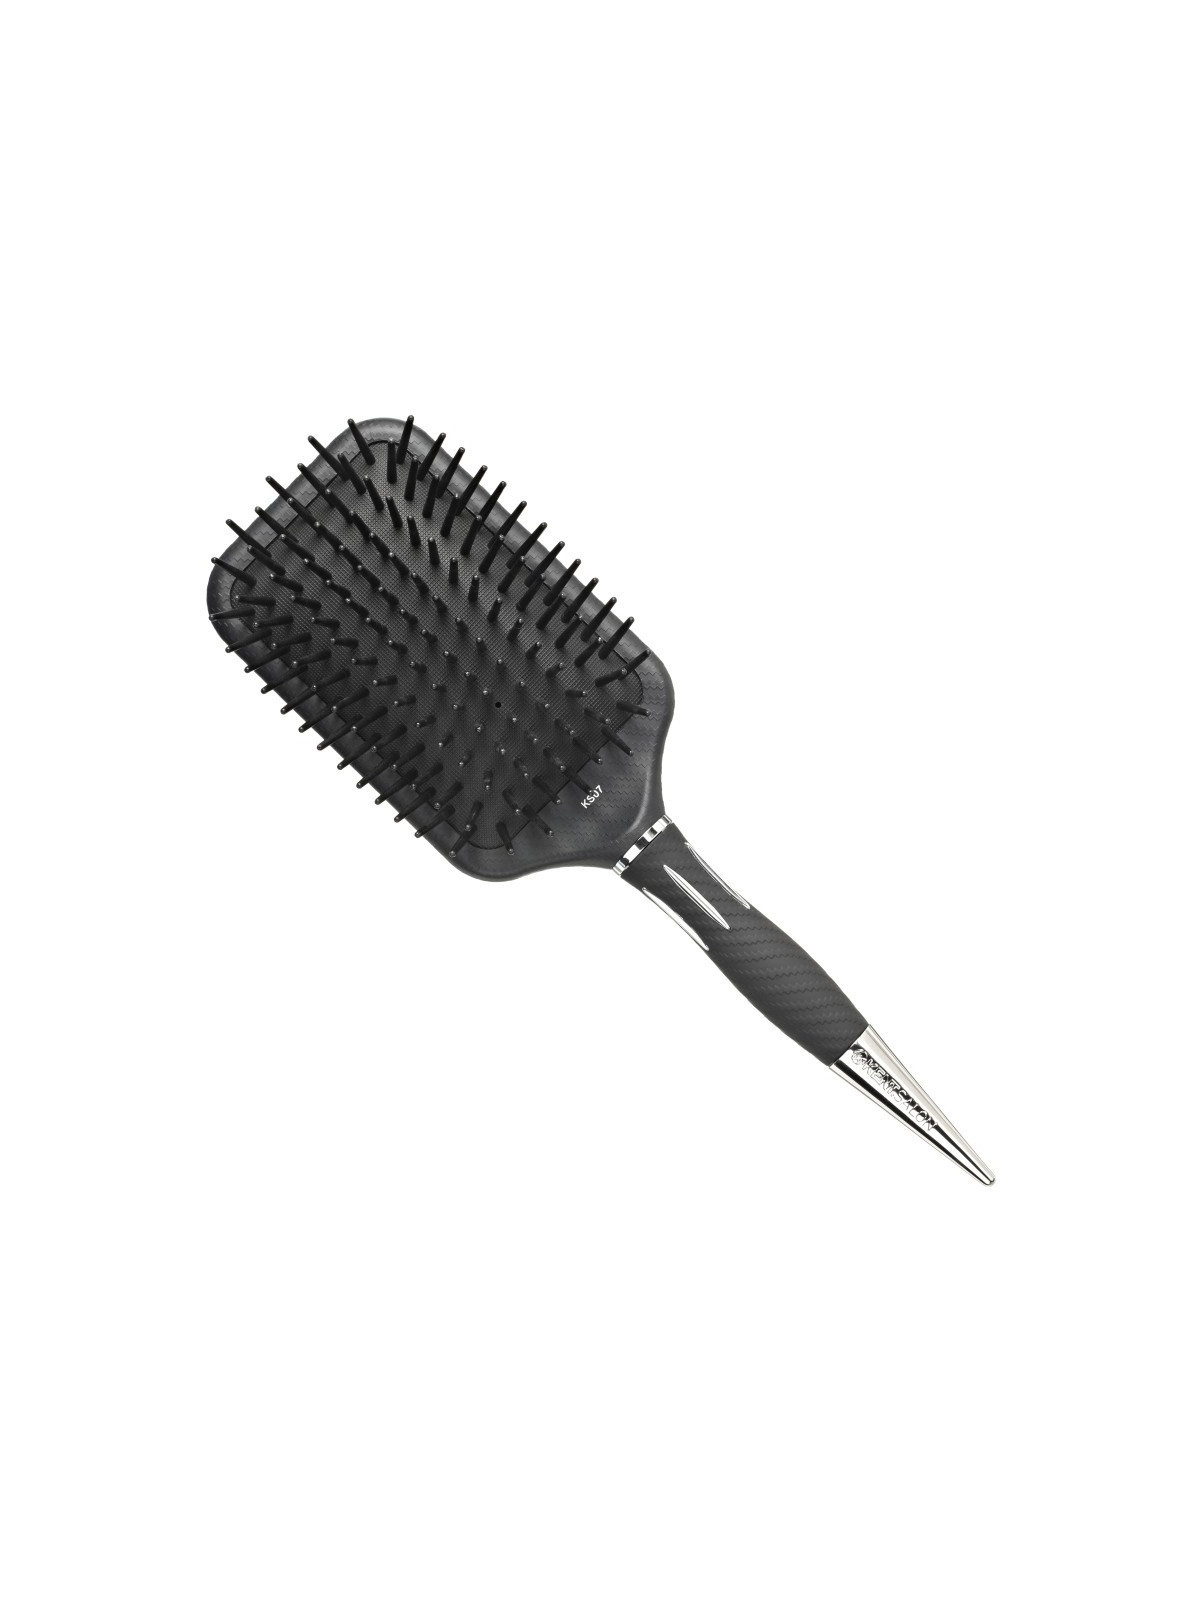 Plaukų šepetys tiesinimui Kent Salon Grooming & Straightening Brush for Thick and/or Wet Hair